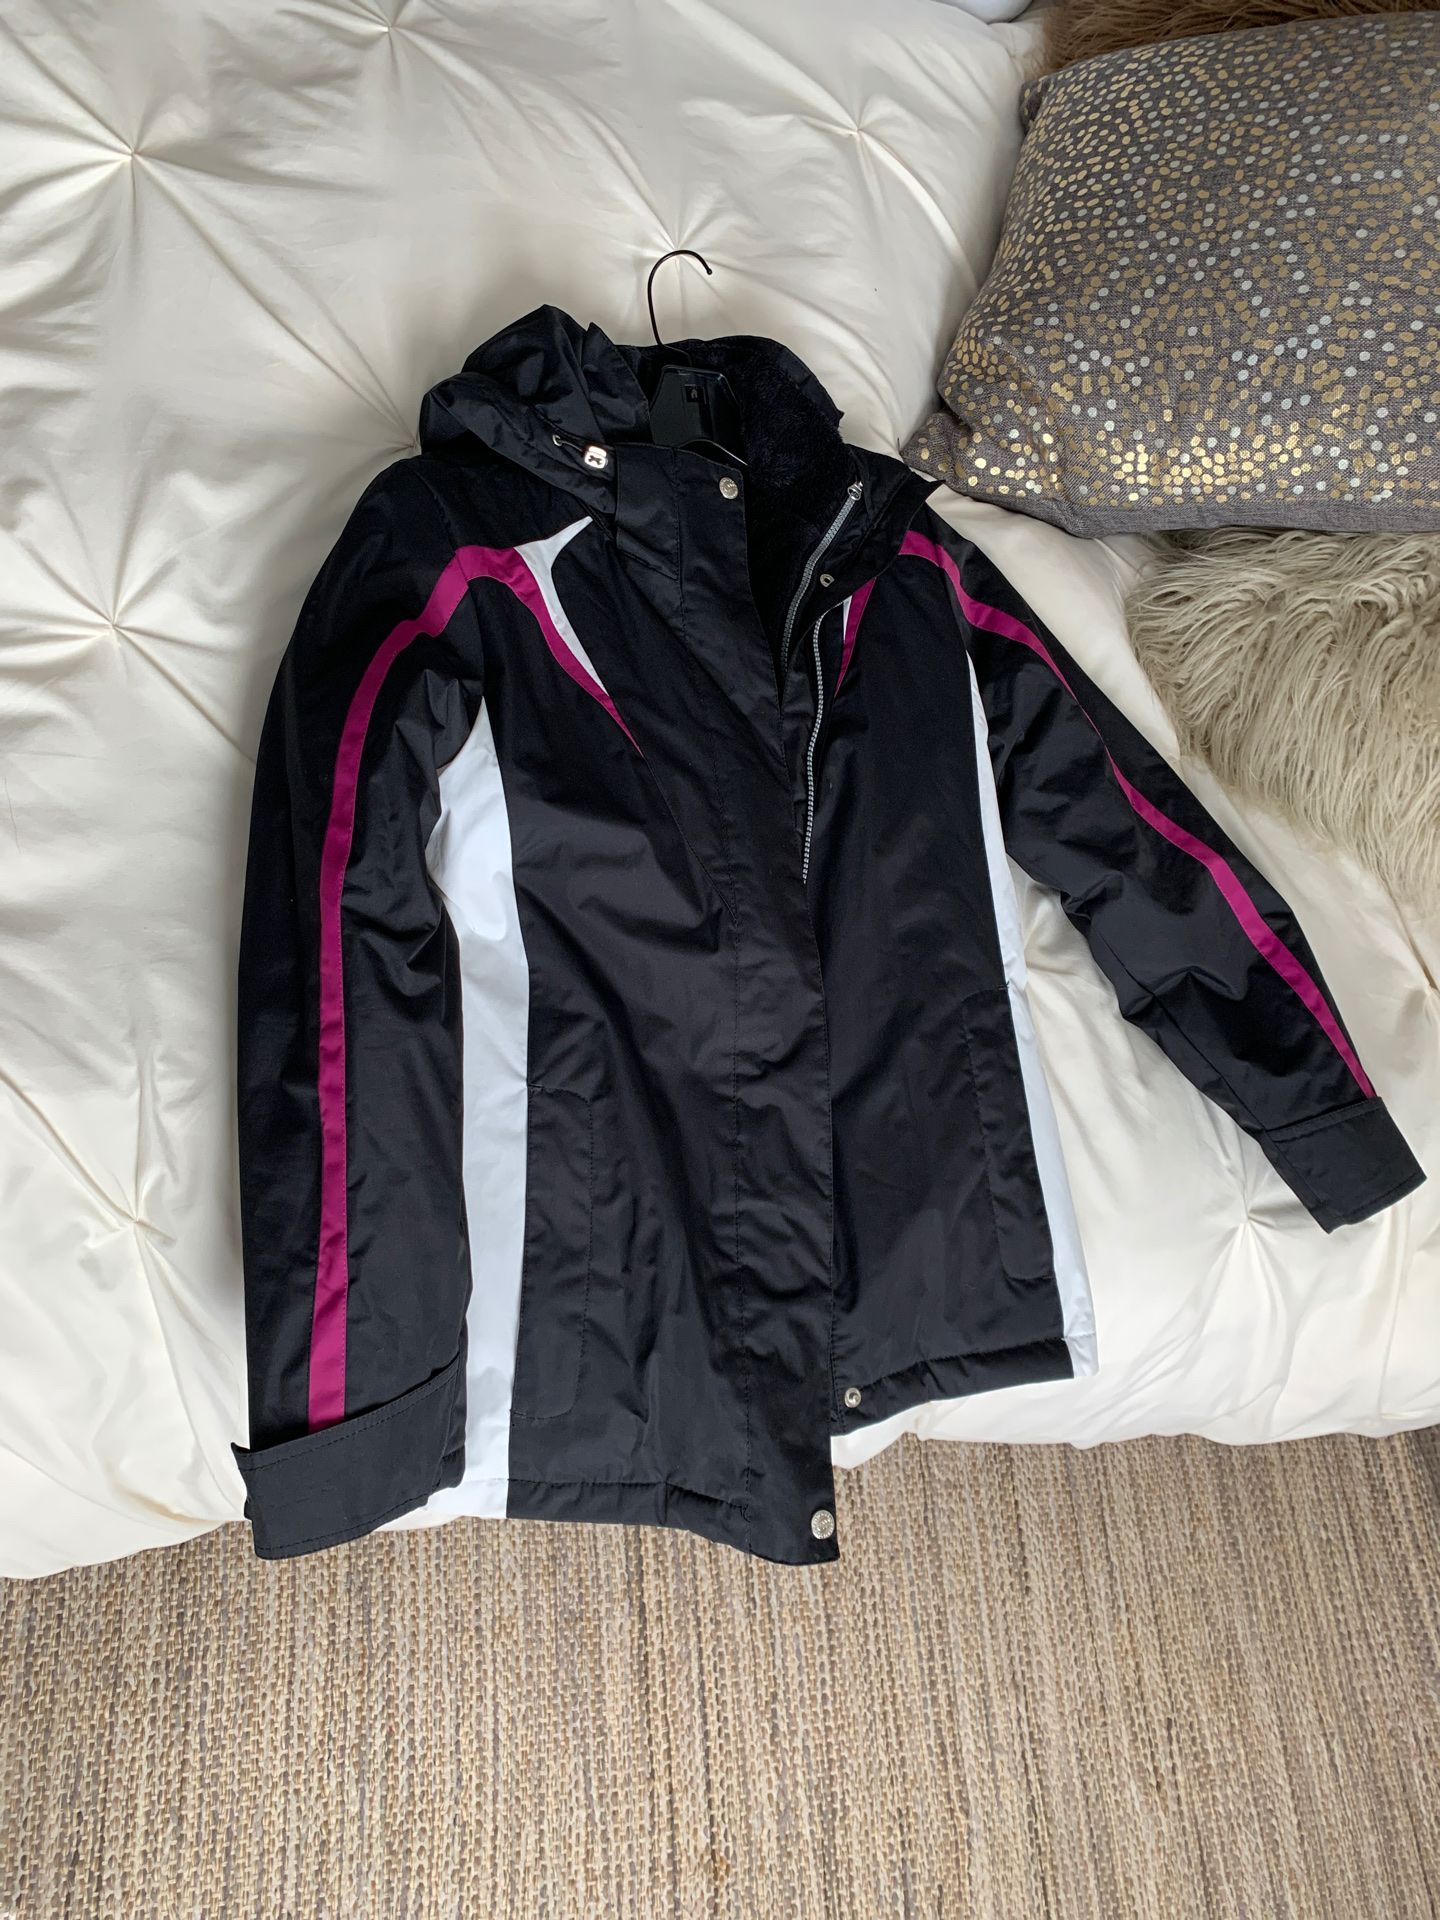 Ladies small black white magenta ski coat jacket new never worn